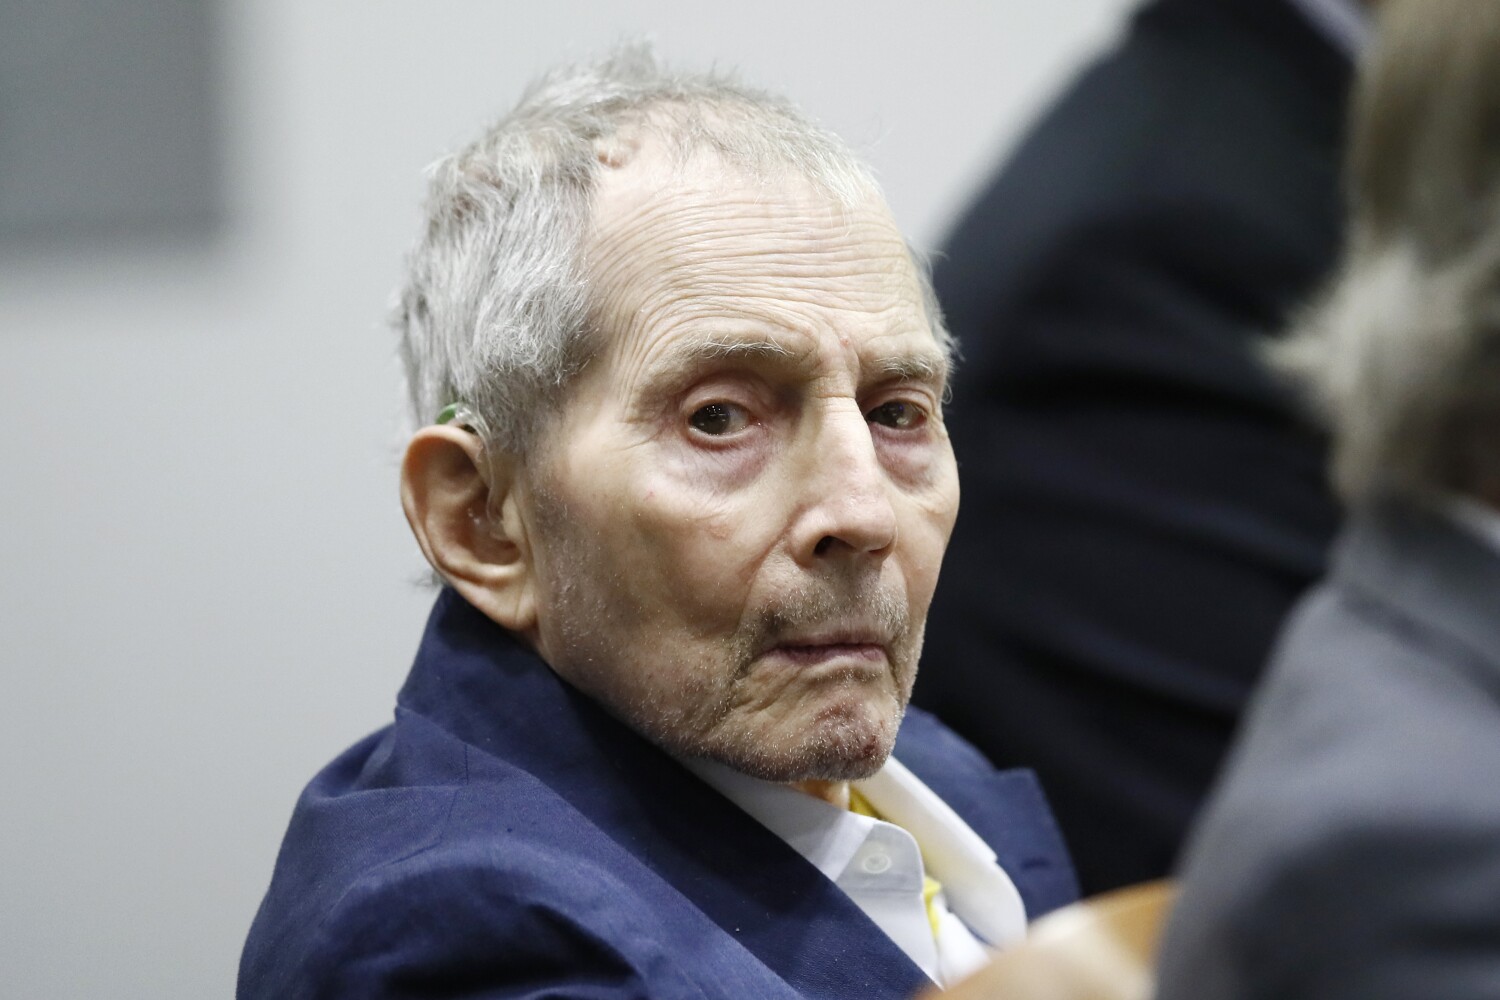 Robert Durst, real estate scion convicted of murder, dies